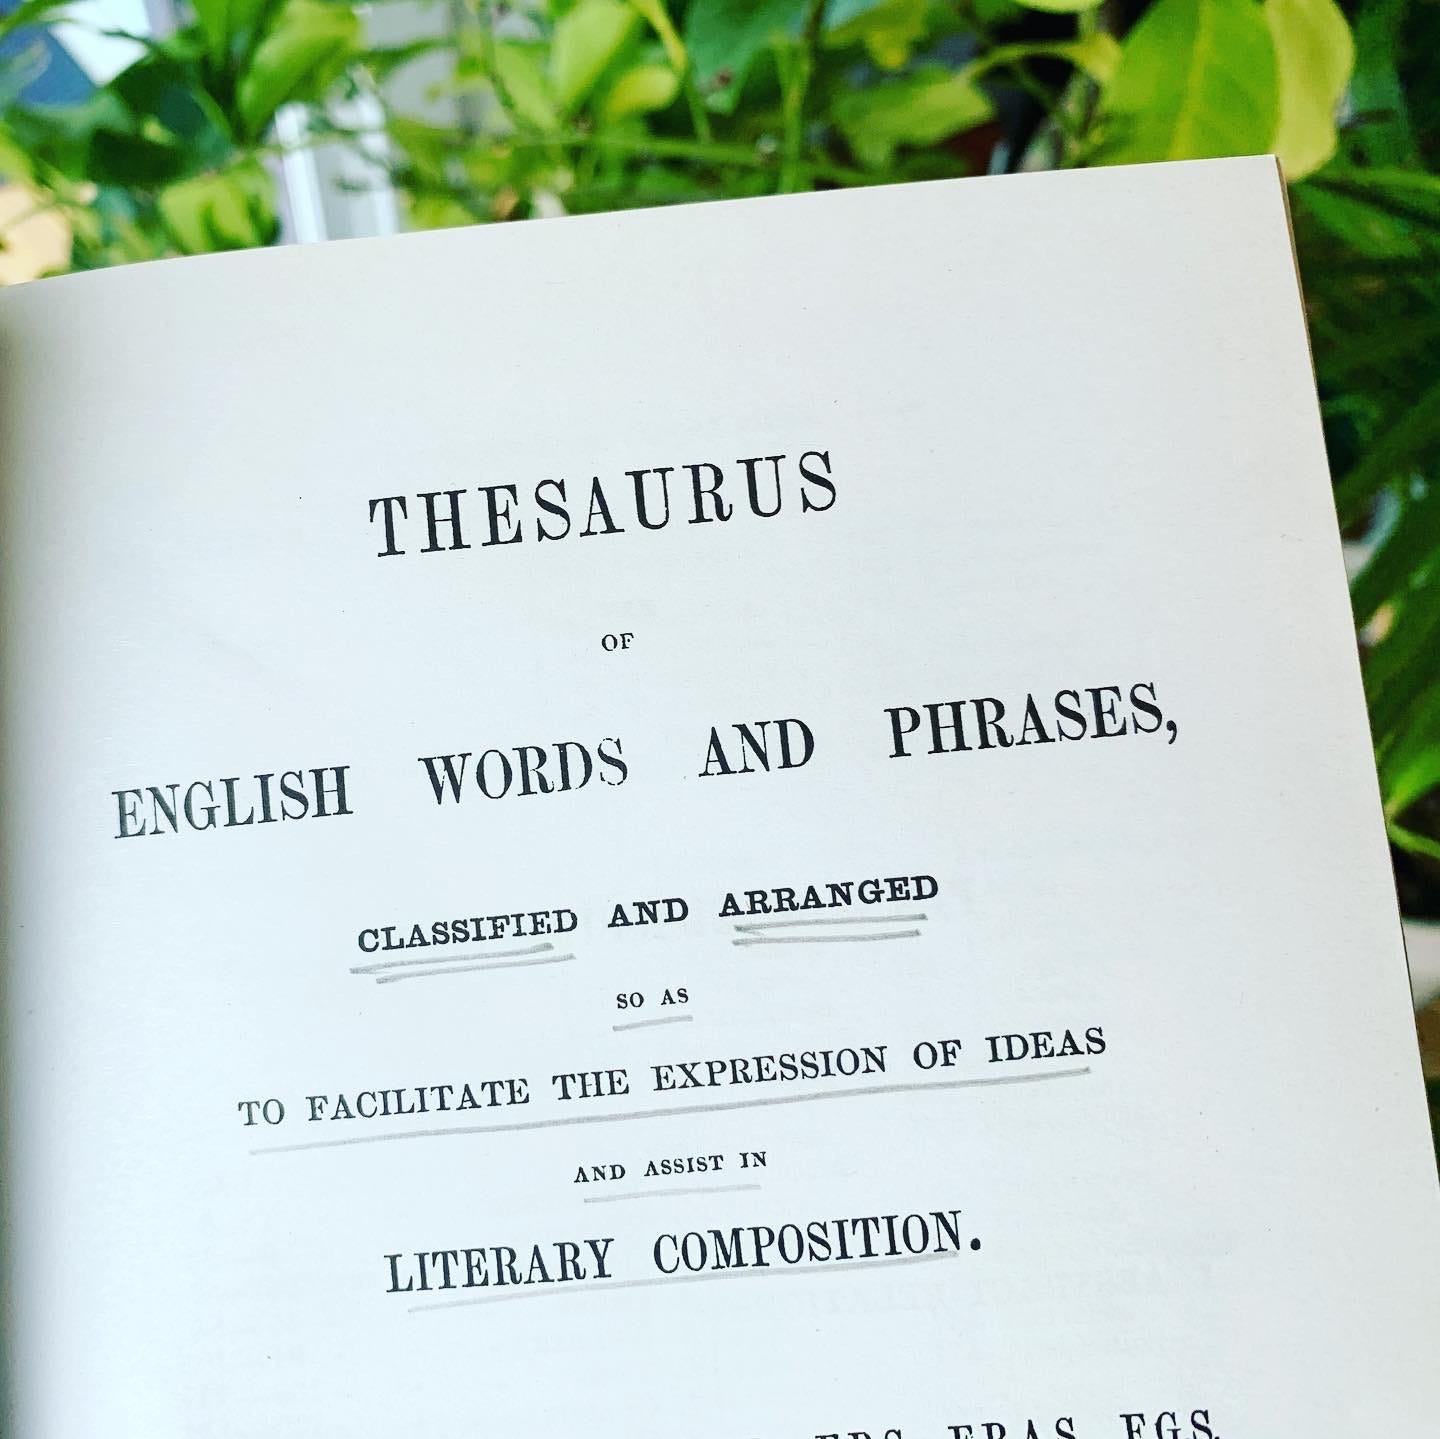 bother thesaurus